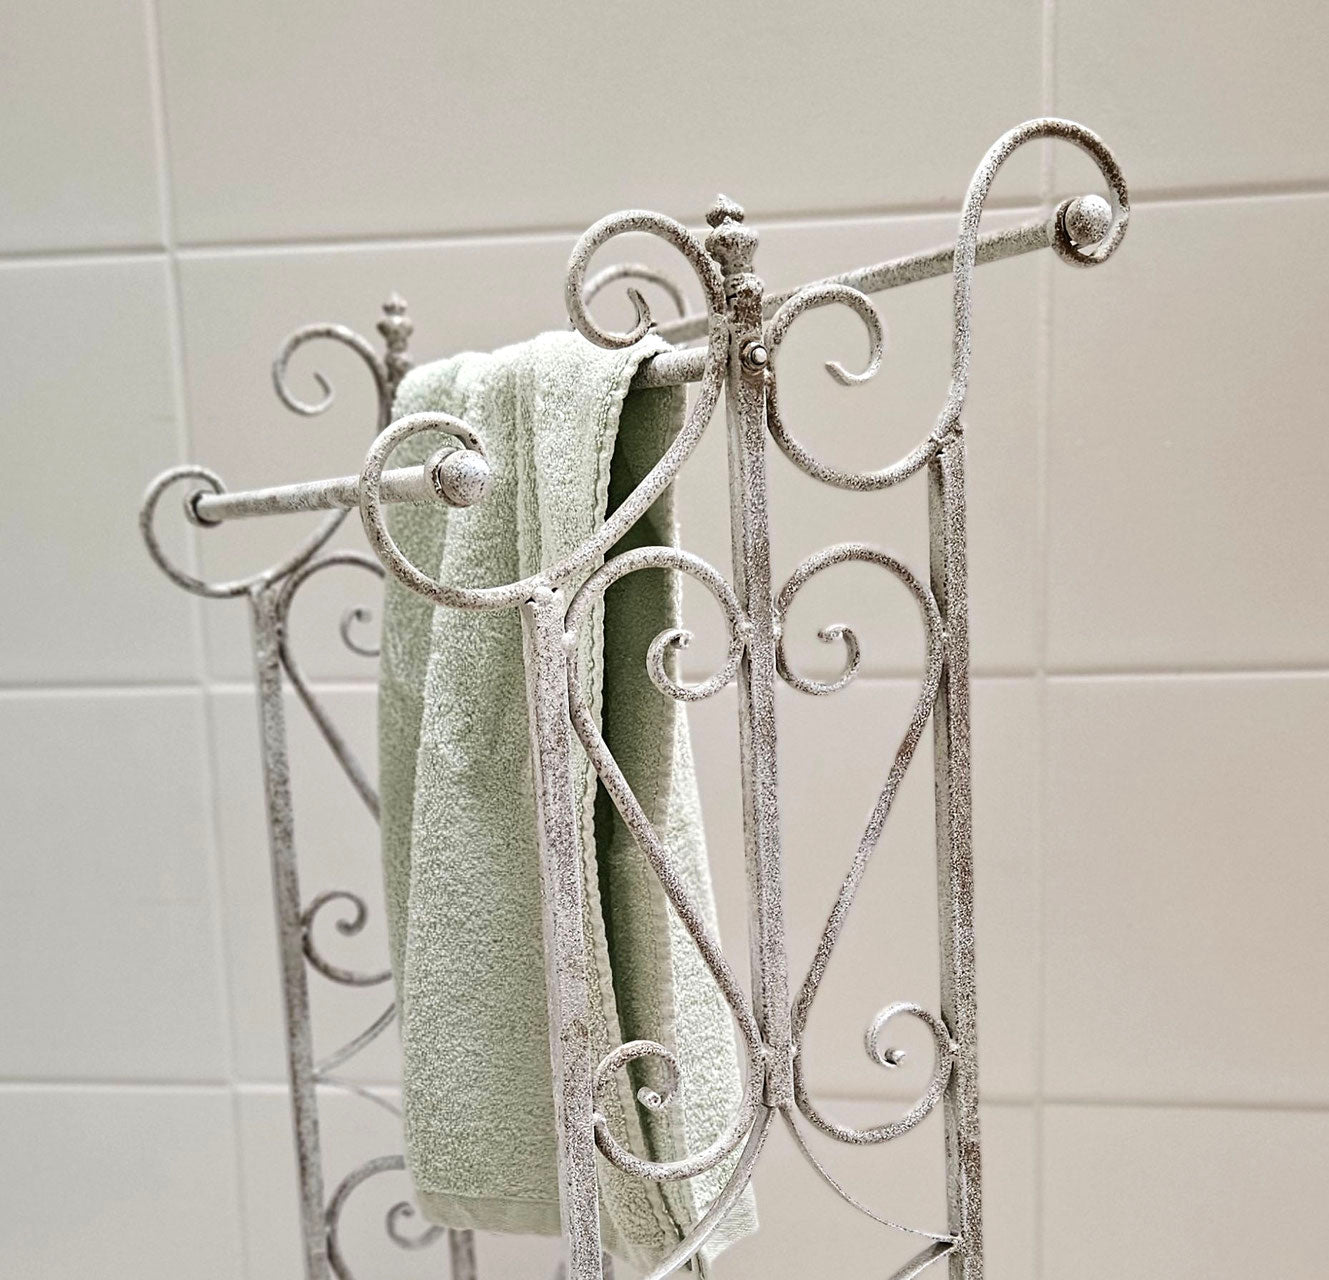 Jero - Romantic towel rail in shabby chic style